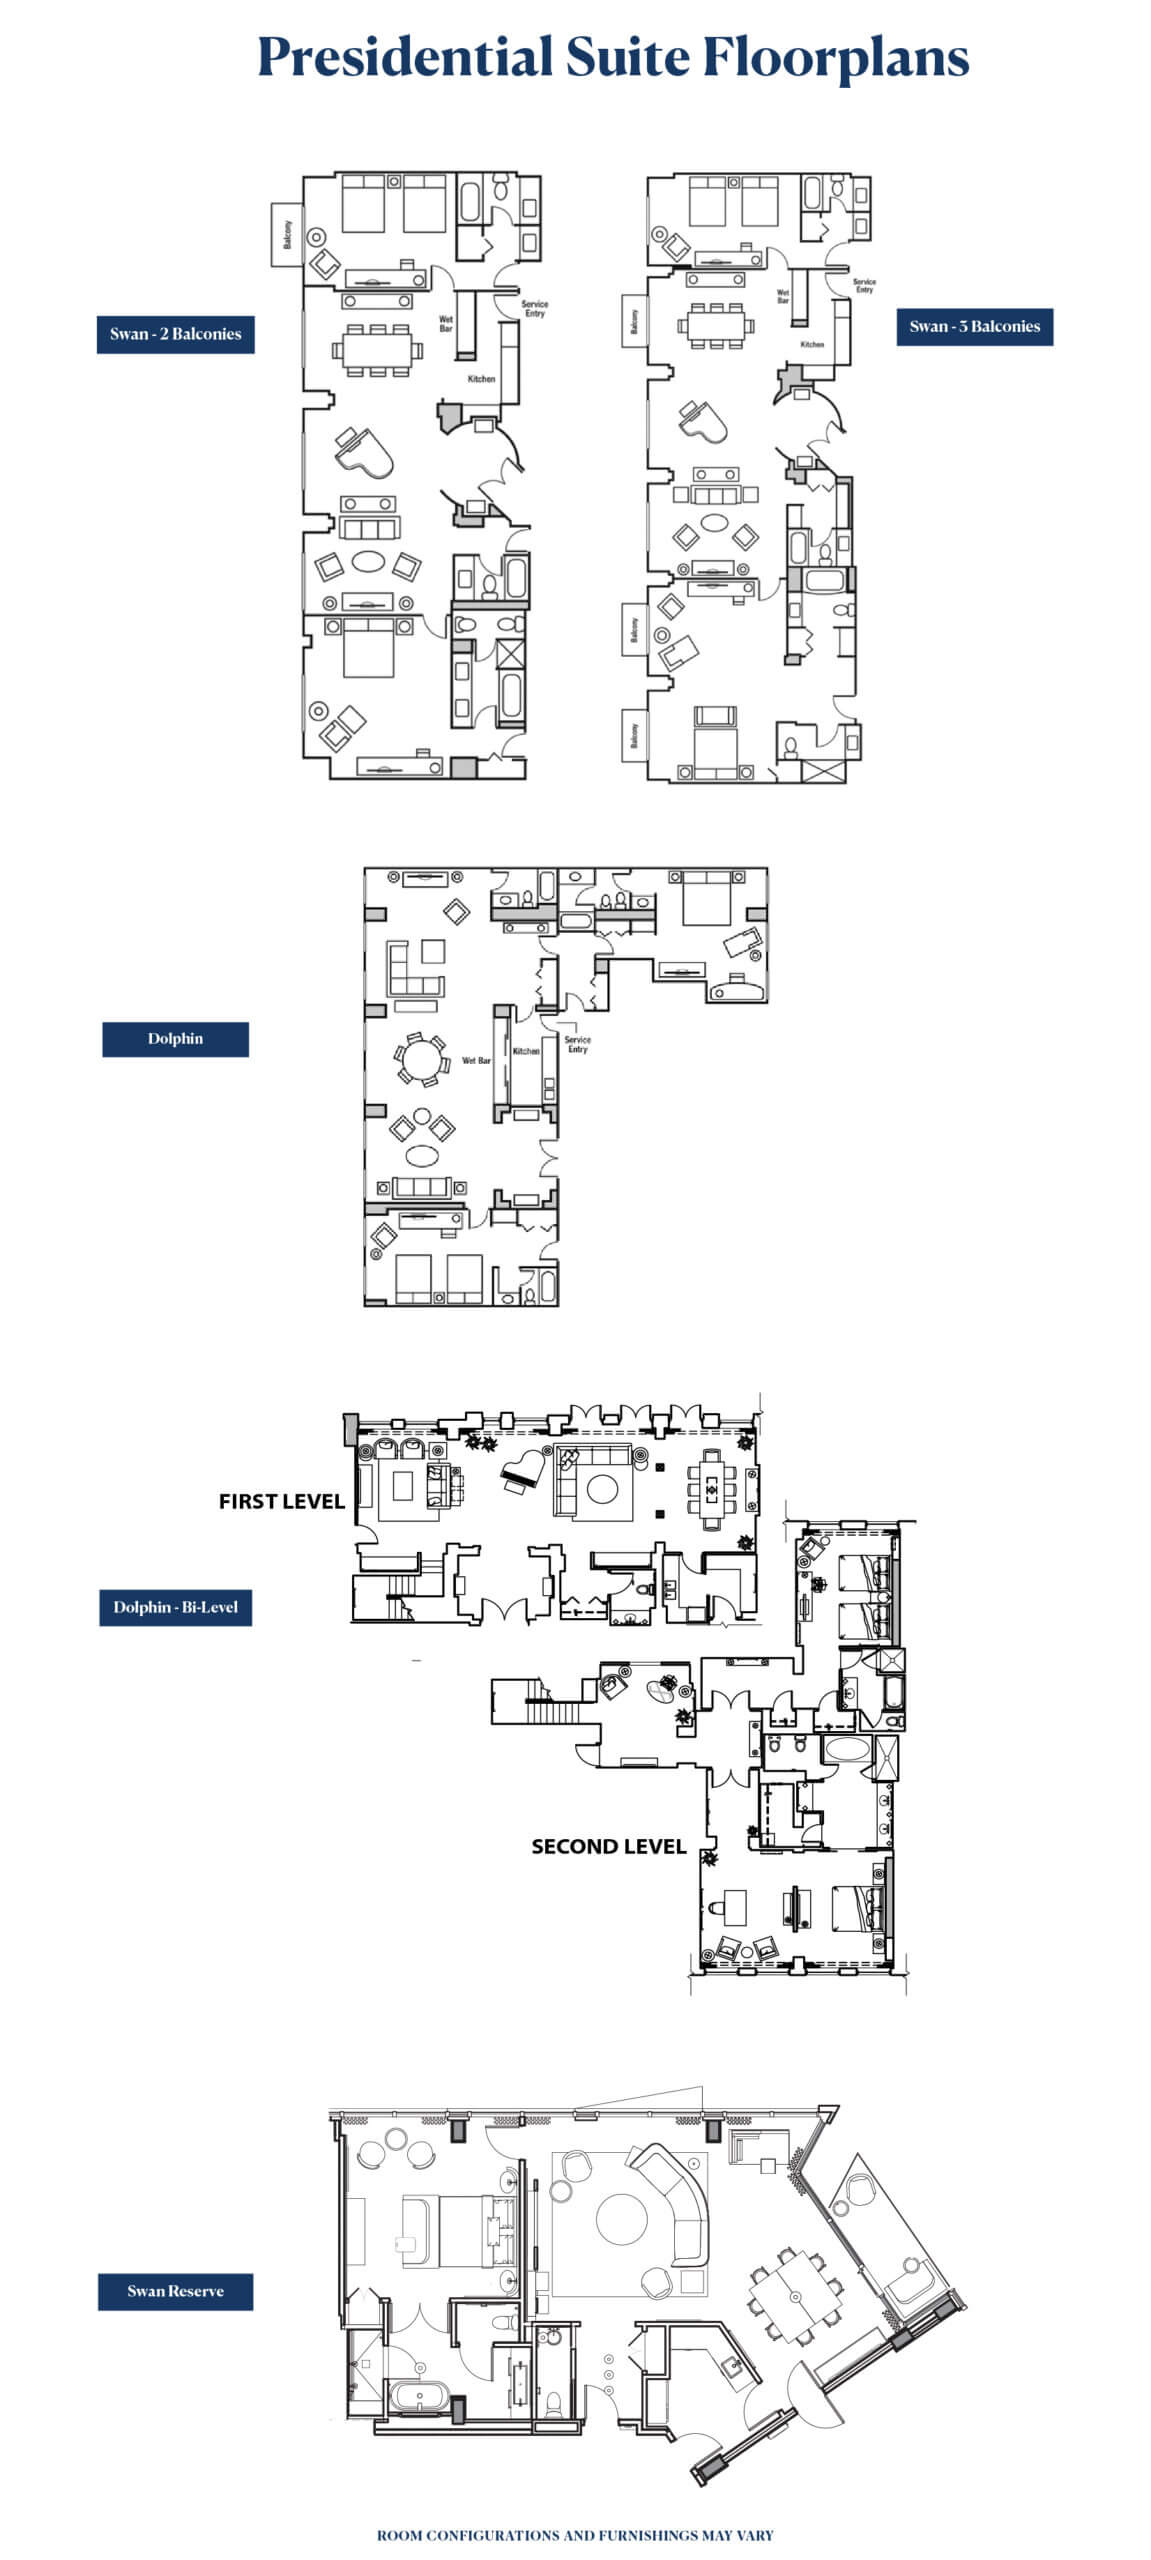 Floorplans of the presidential suites.